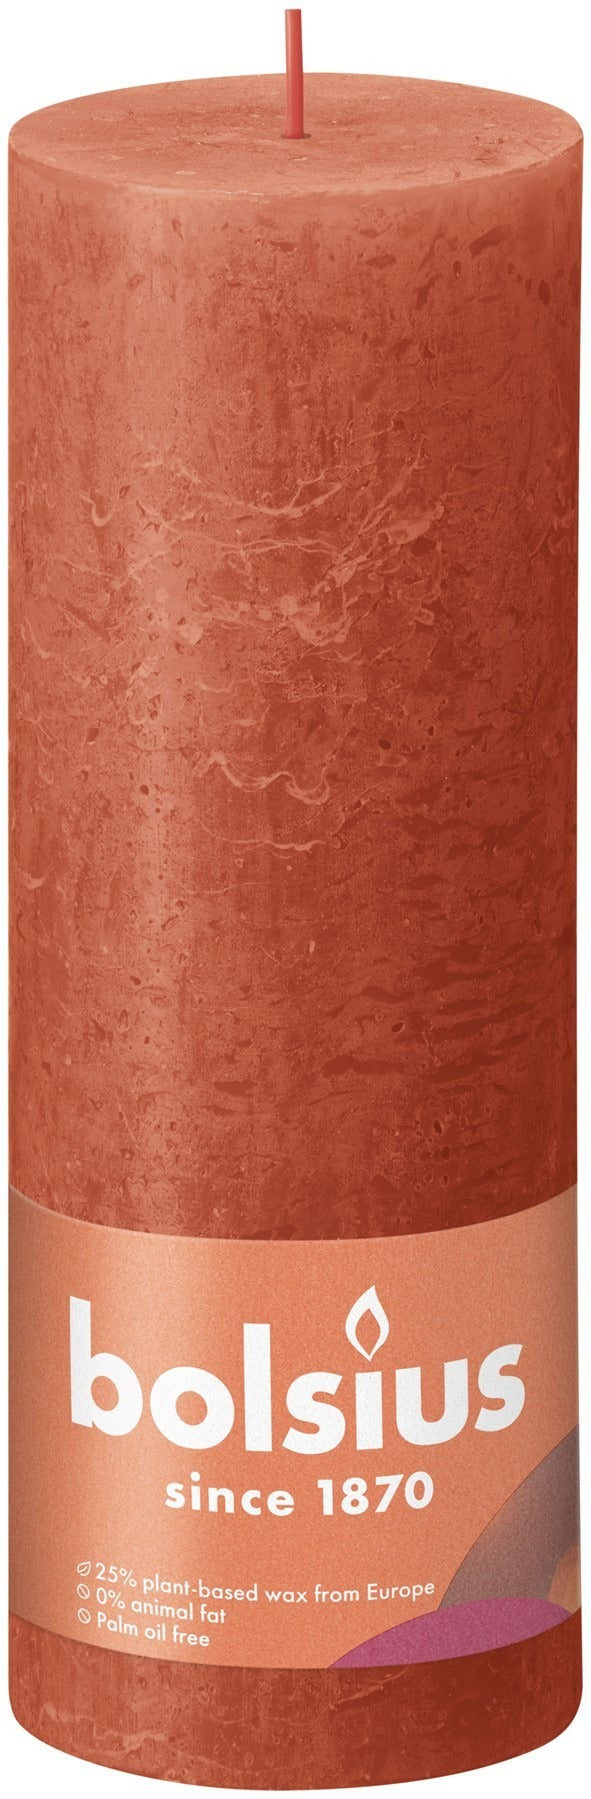 View Earthy Orange Bolsius Rustic Shine Pillar Candle 190 x 68mm information